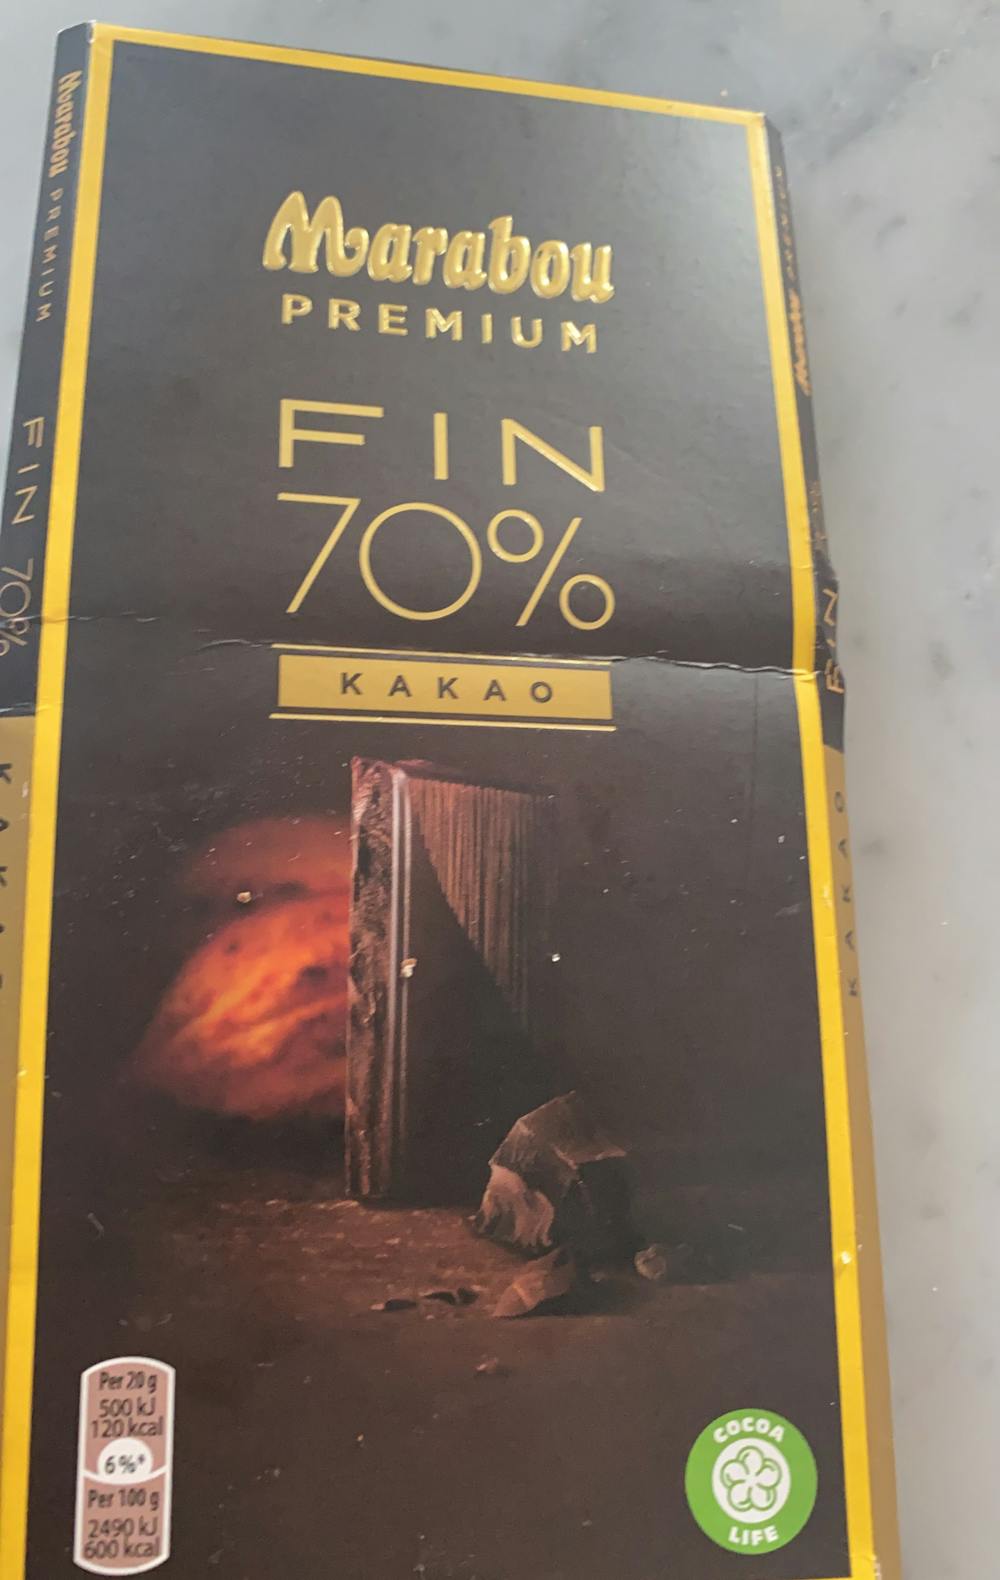 Fin 70% kakao, Marabou premium